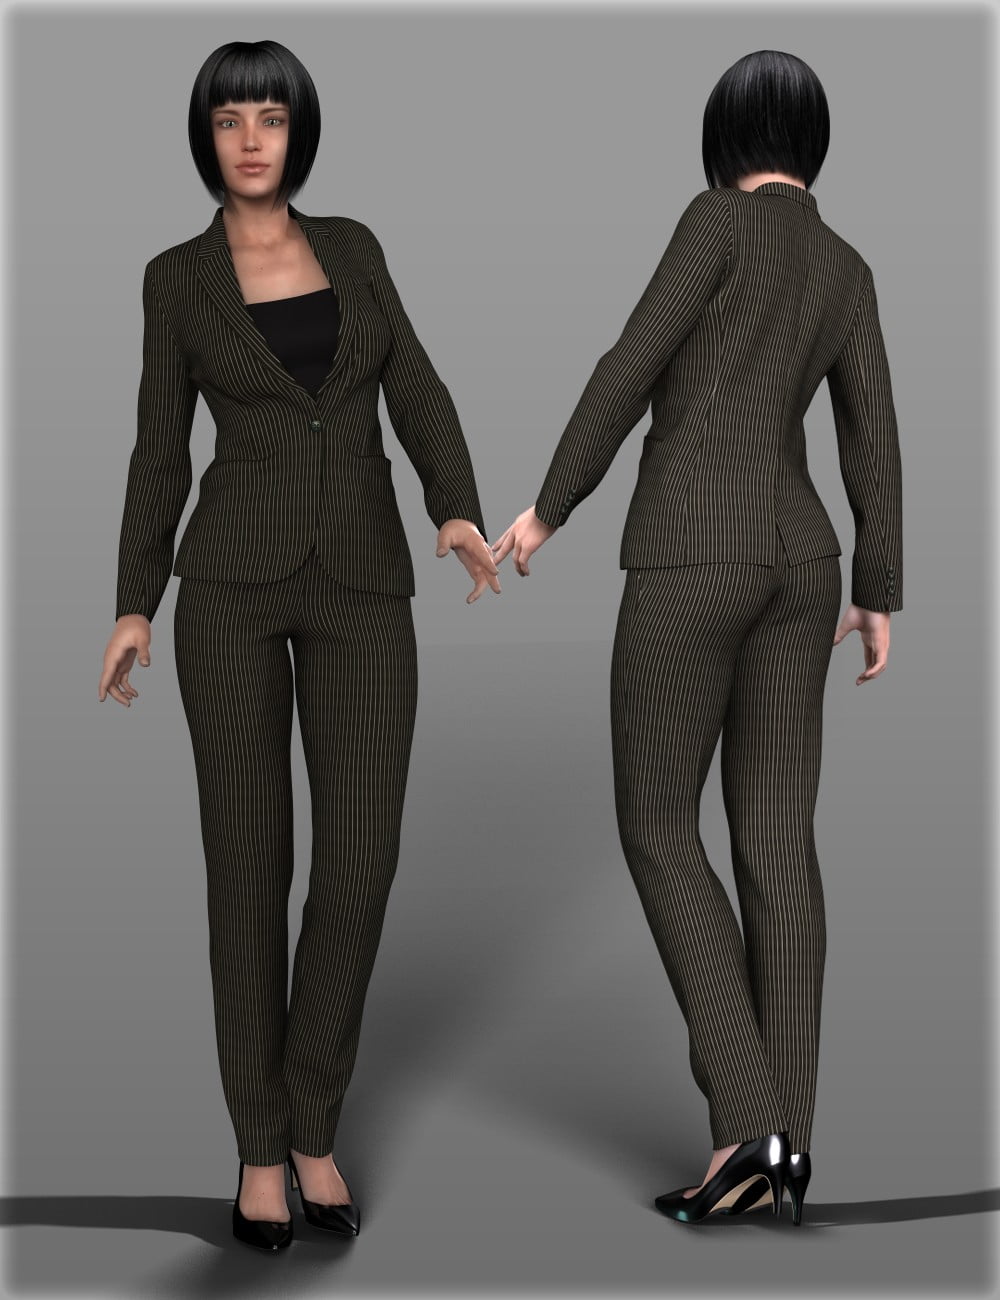 03-womens-suits-b-for-genesis-2-females-daz3d